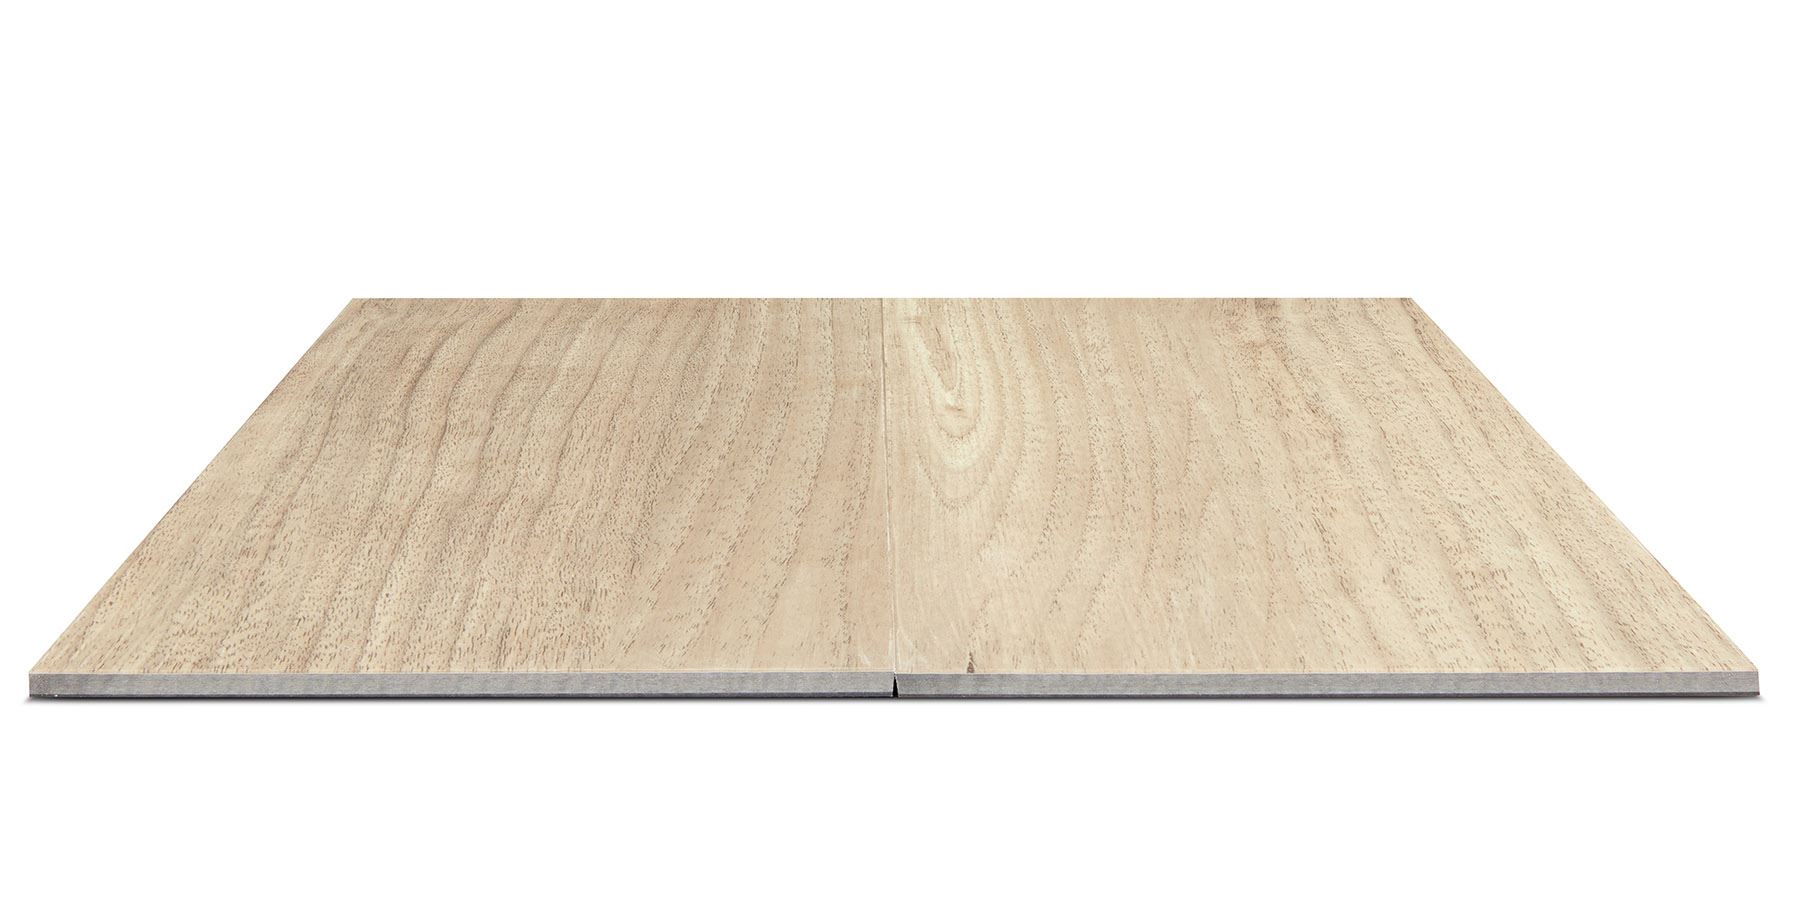 Alliance Commercial Vinyl Plank Flooring